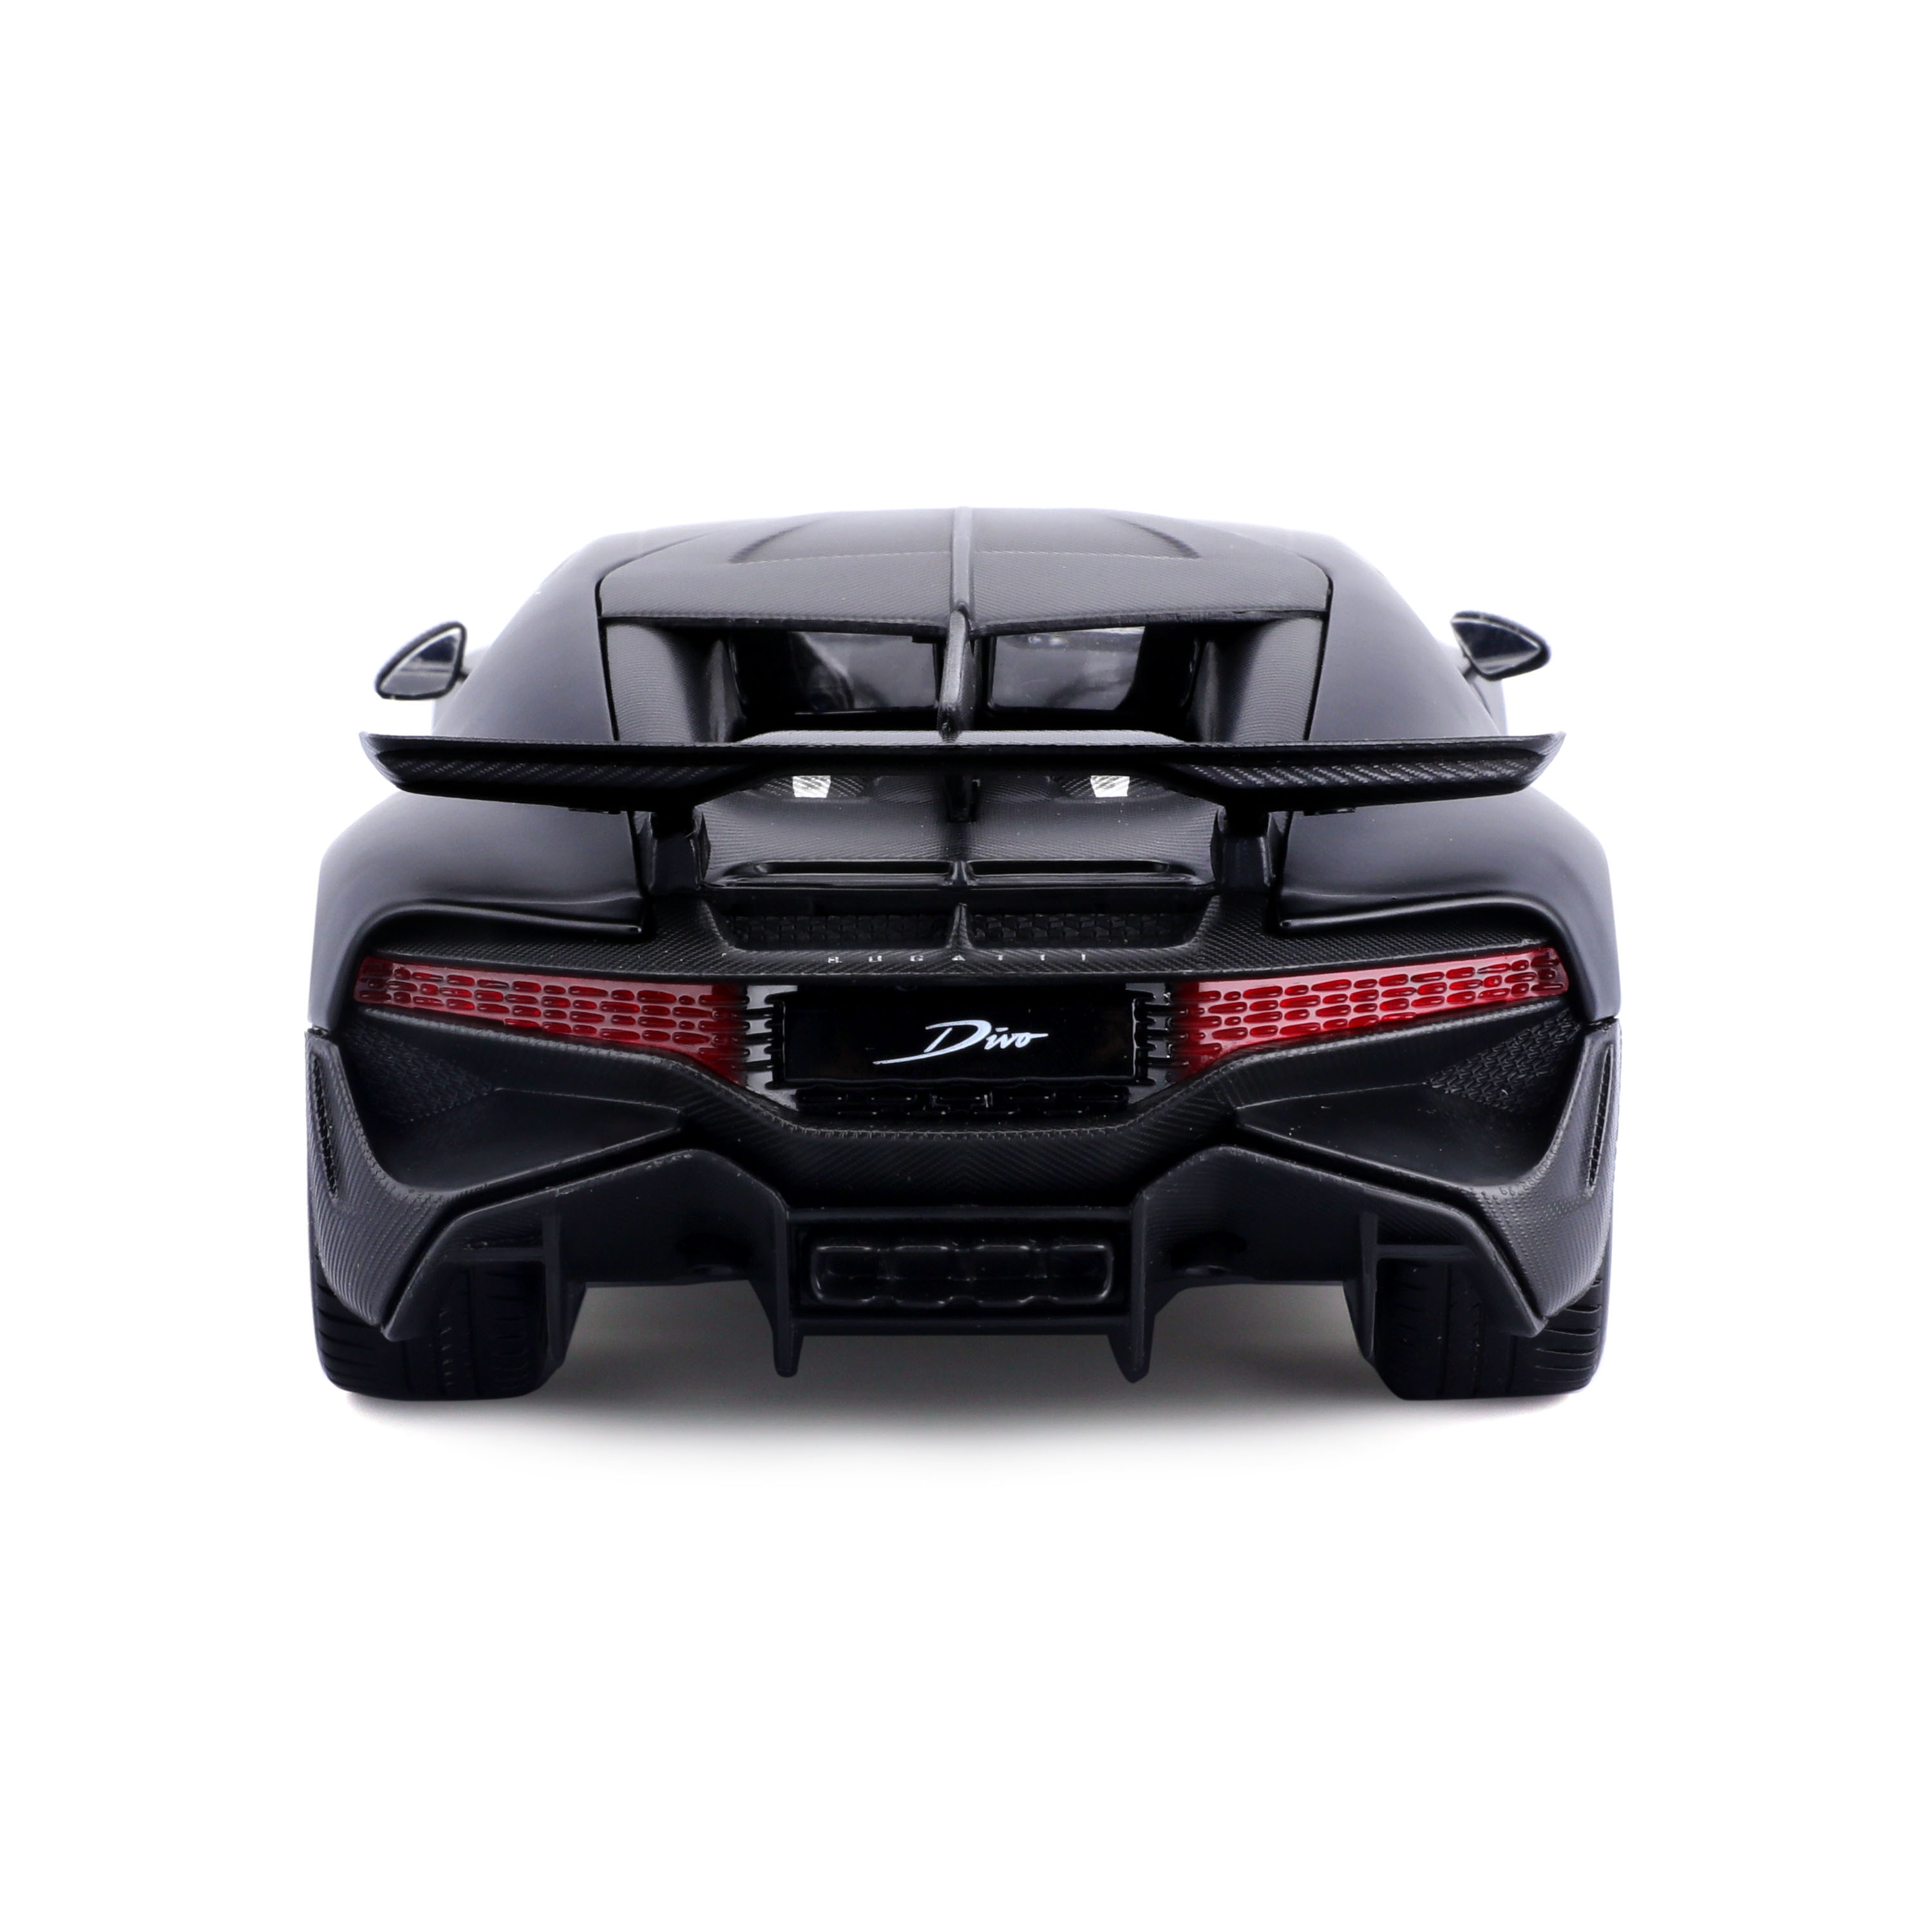 MAISTO 31526M Modellauto Divo - Bugatti (matt-schwarz, Spielzeugauto Maßstab 1:24) 